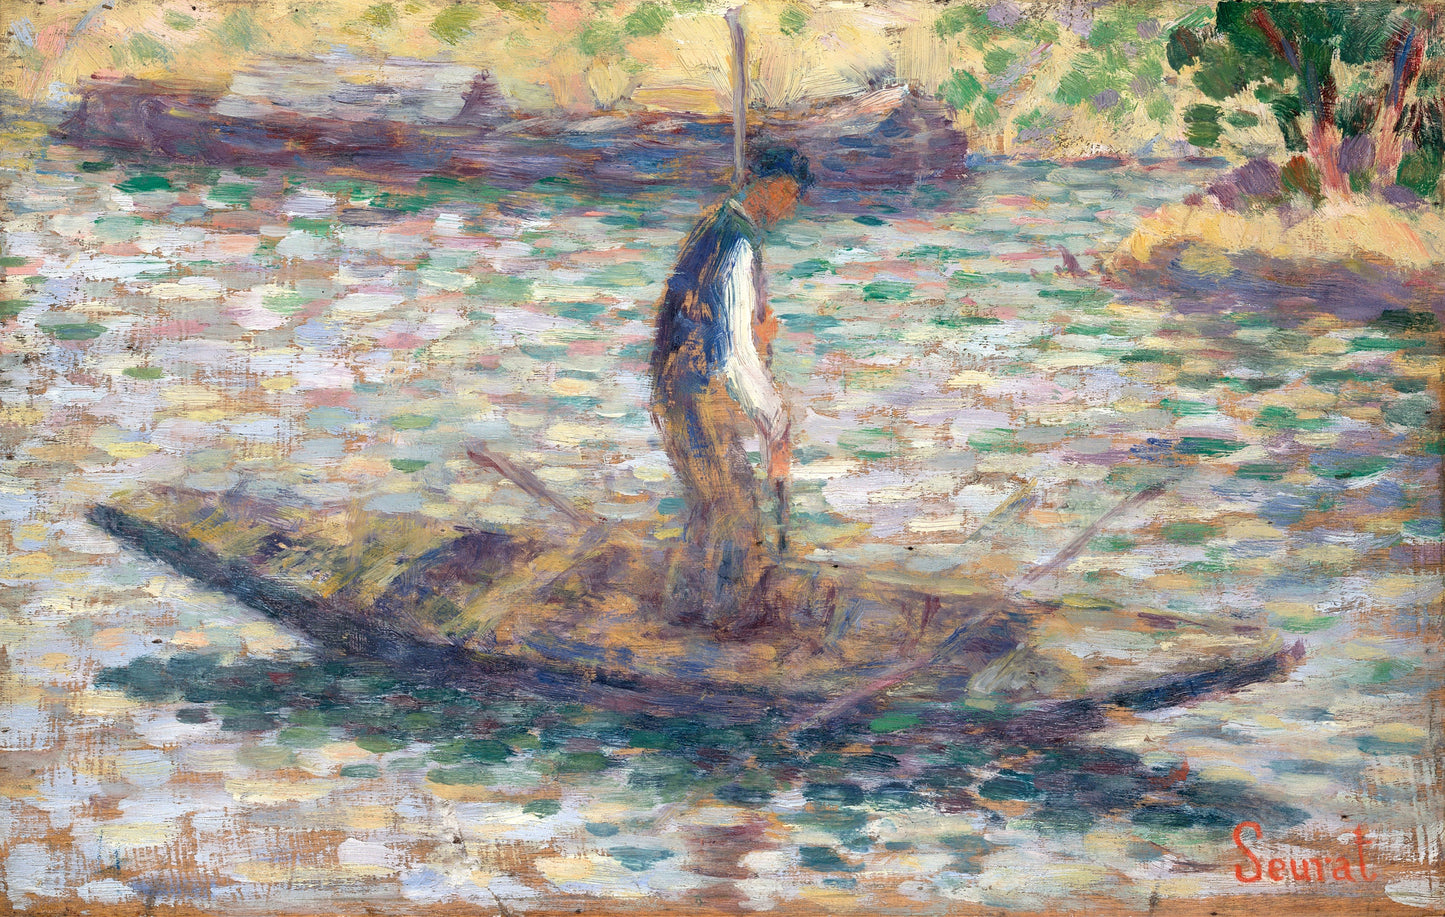 Georges Seurat Neo Impressionist Paintings Set 1 [14 Images]